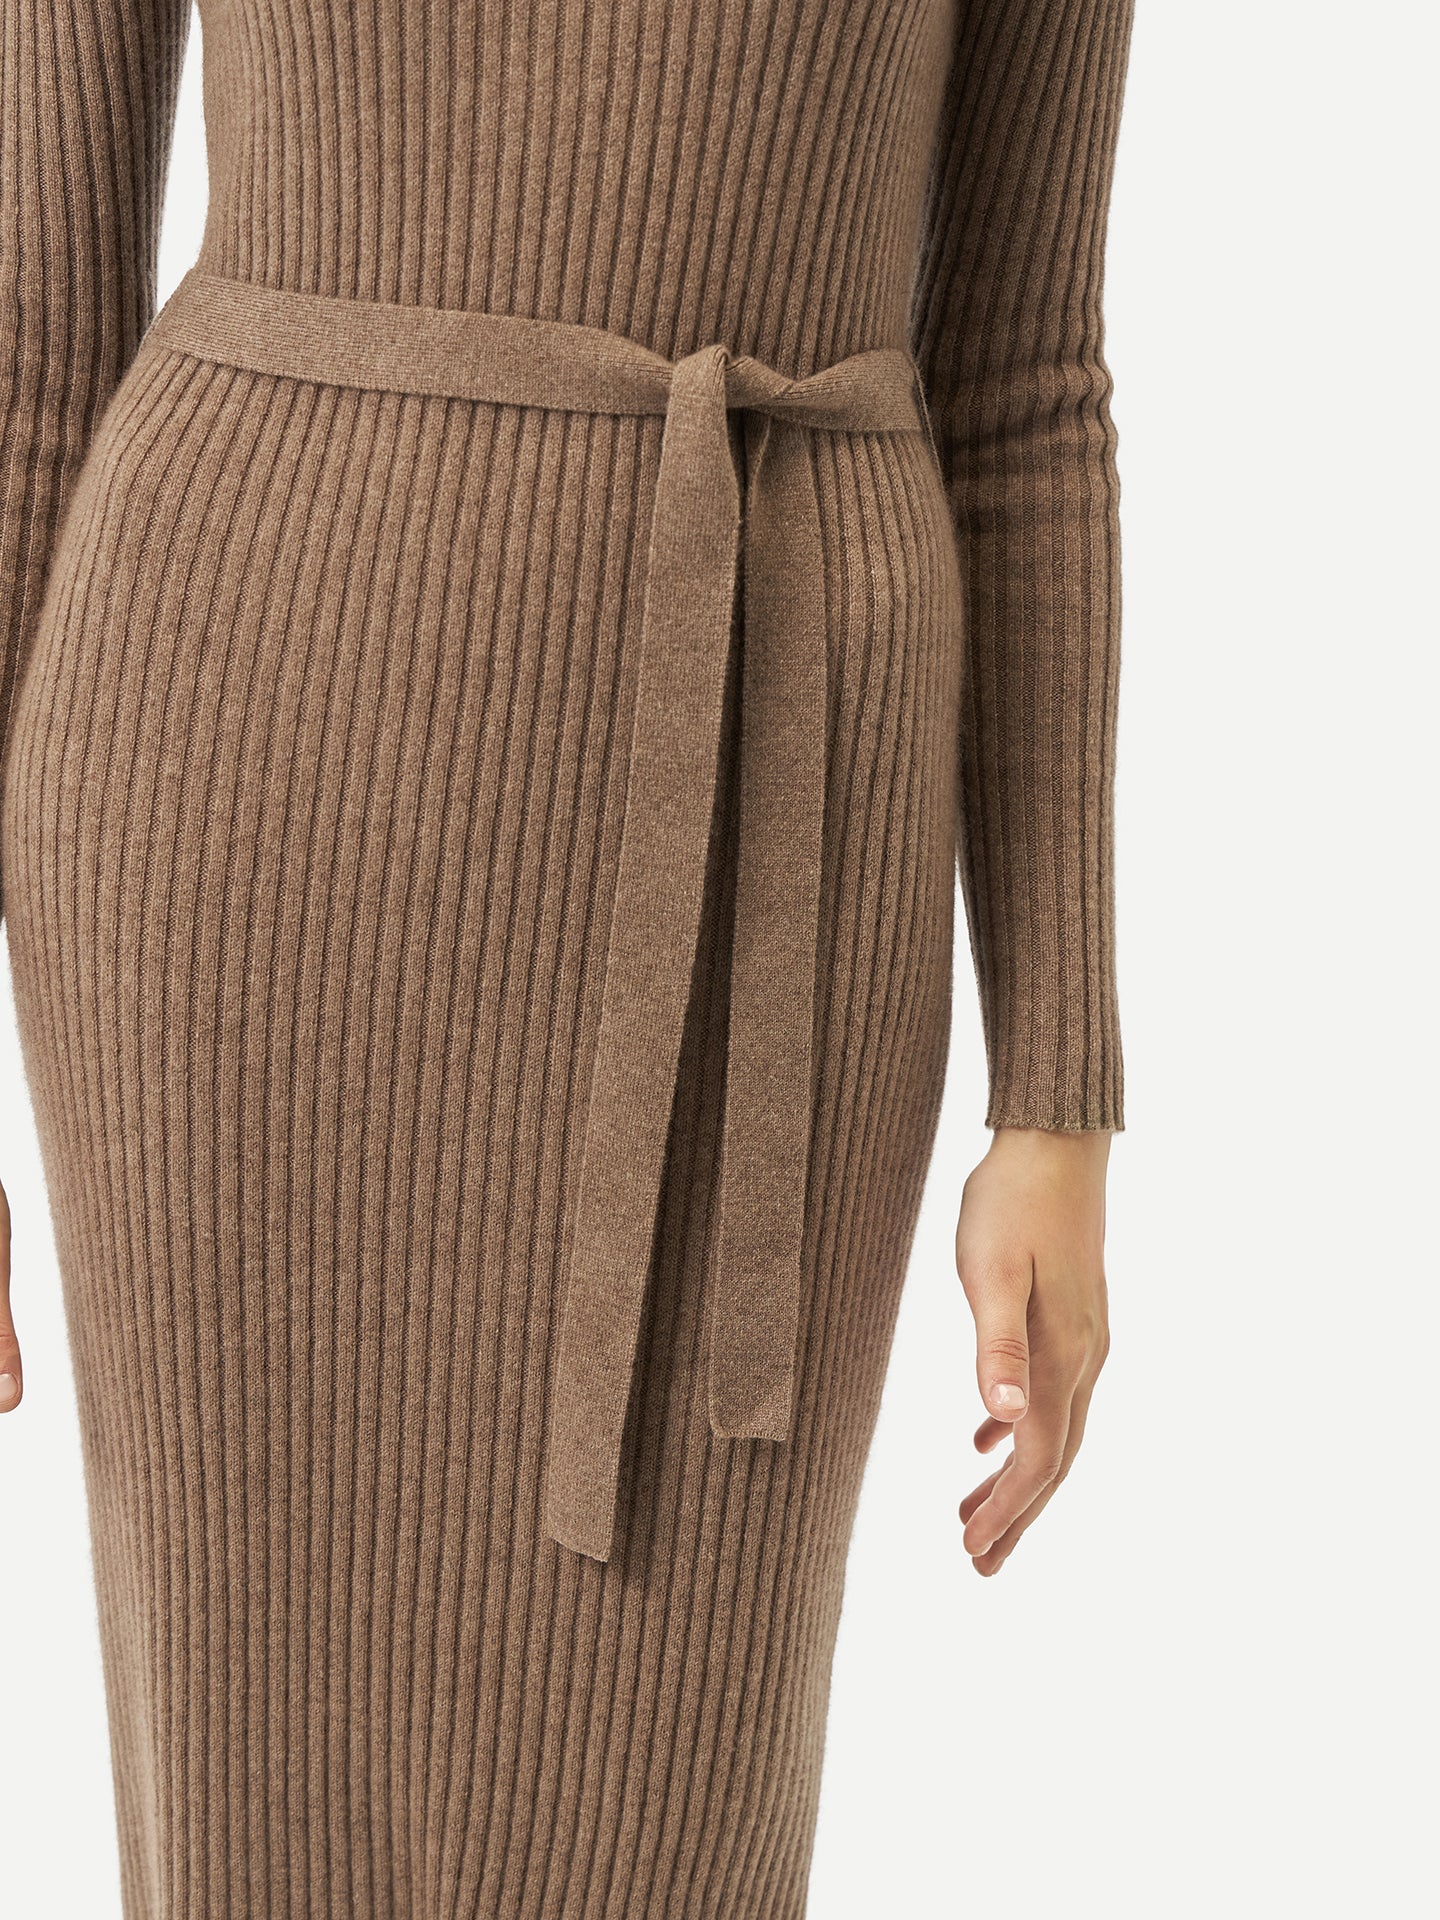 Women's Organic Cashmere Knit Dress with Belt Taupe - Gobi Cashmere